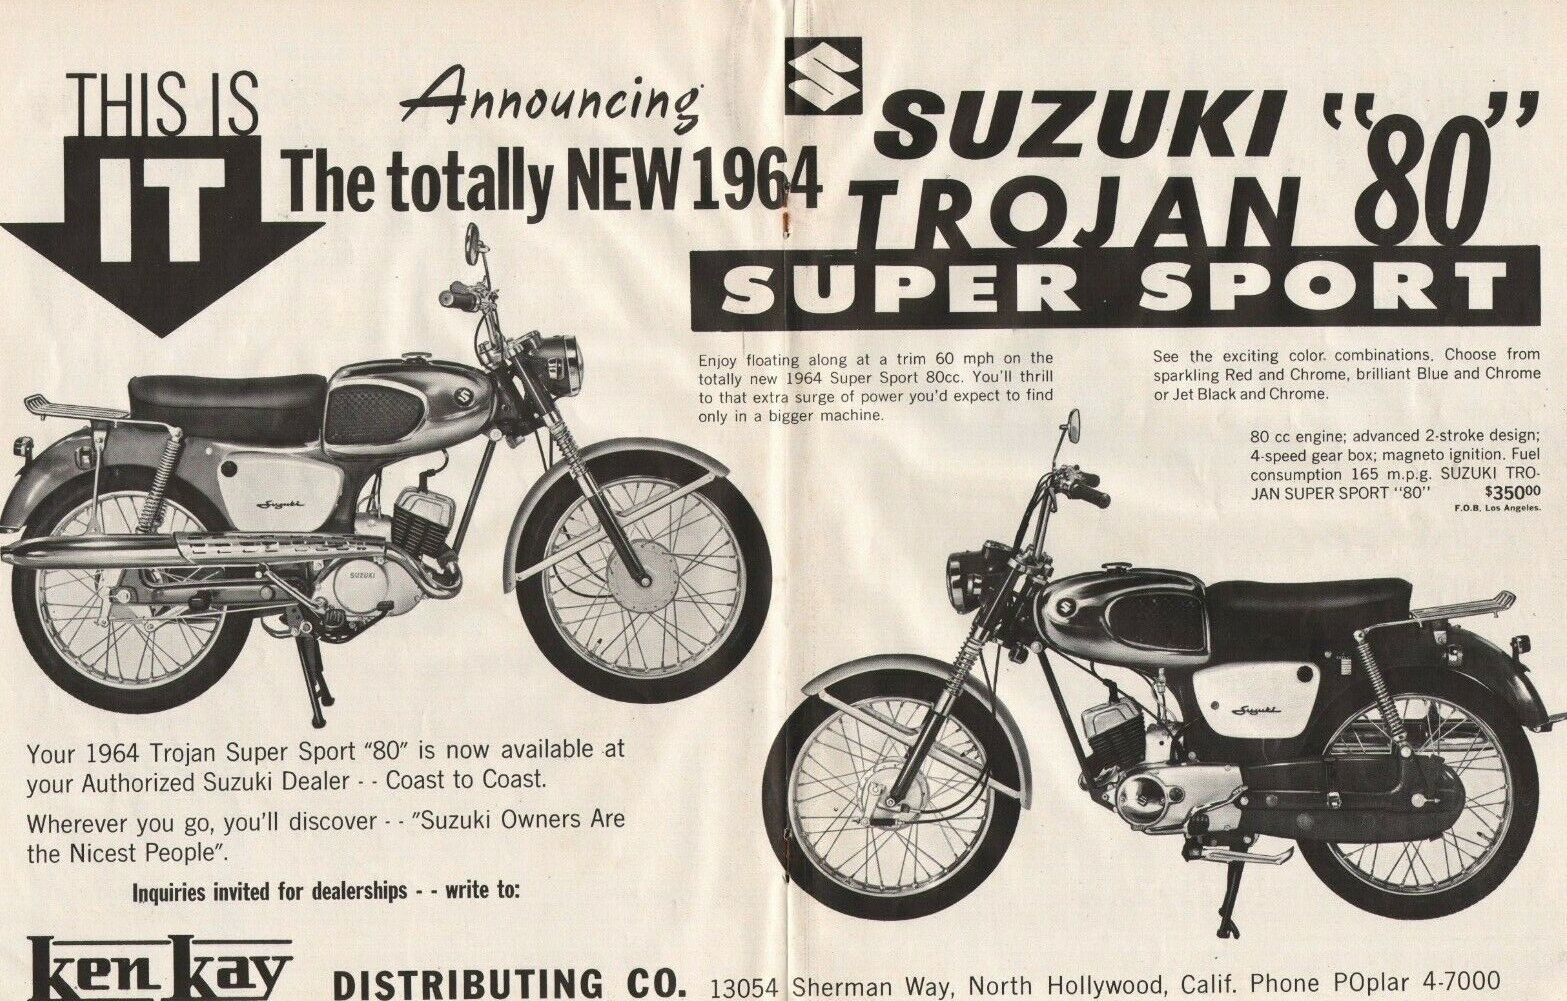 1964 Suzuki Trojan 80 Super Sport - 2-Page Vintage Motorcycle Ad